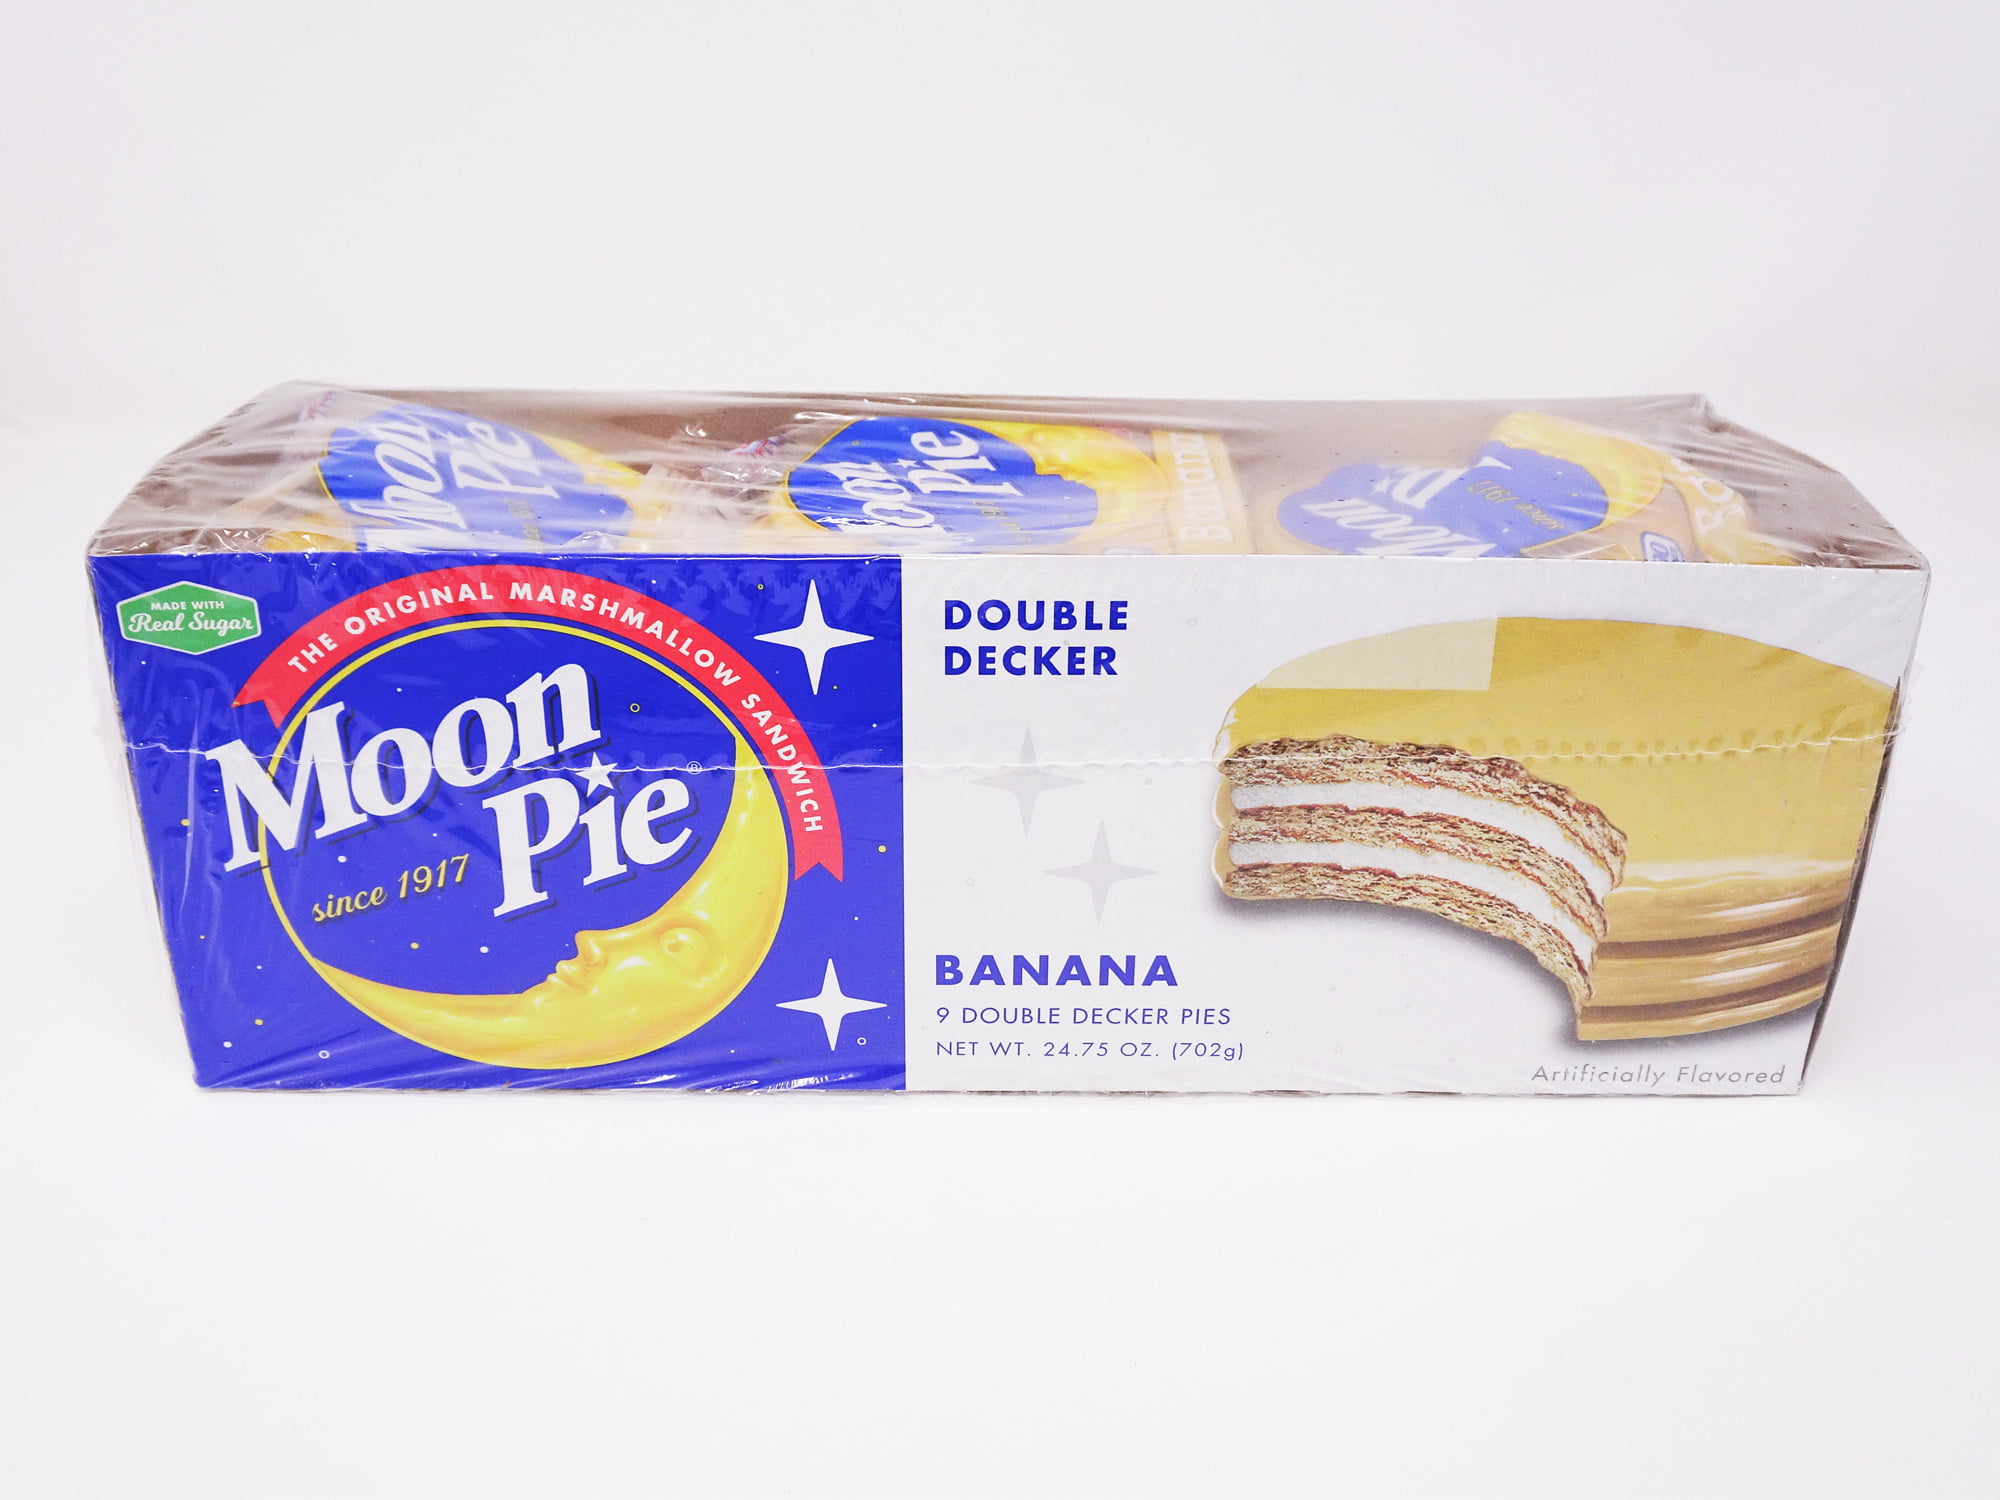 Состав пая. Печенье Moon pie состав. Moon pie. Moon pie Double Decker как на упаковке Тип продукта. Moon pie Double Decker отзывы покупателей.